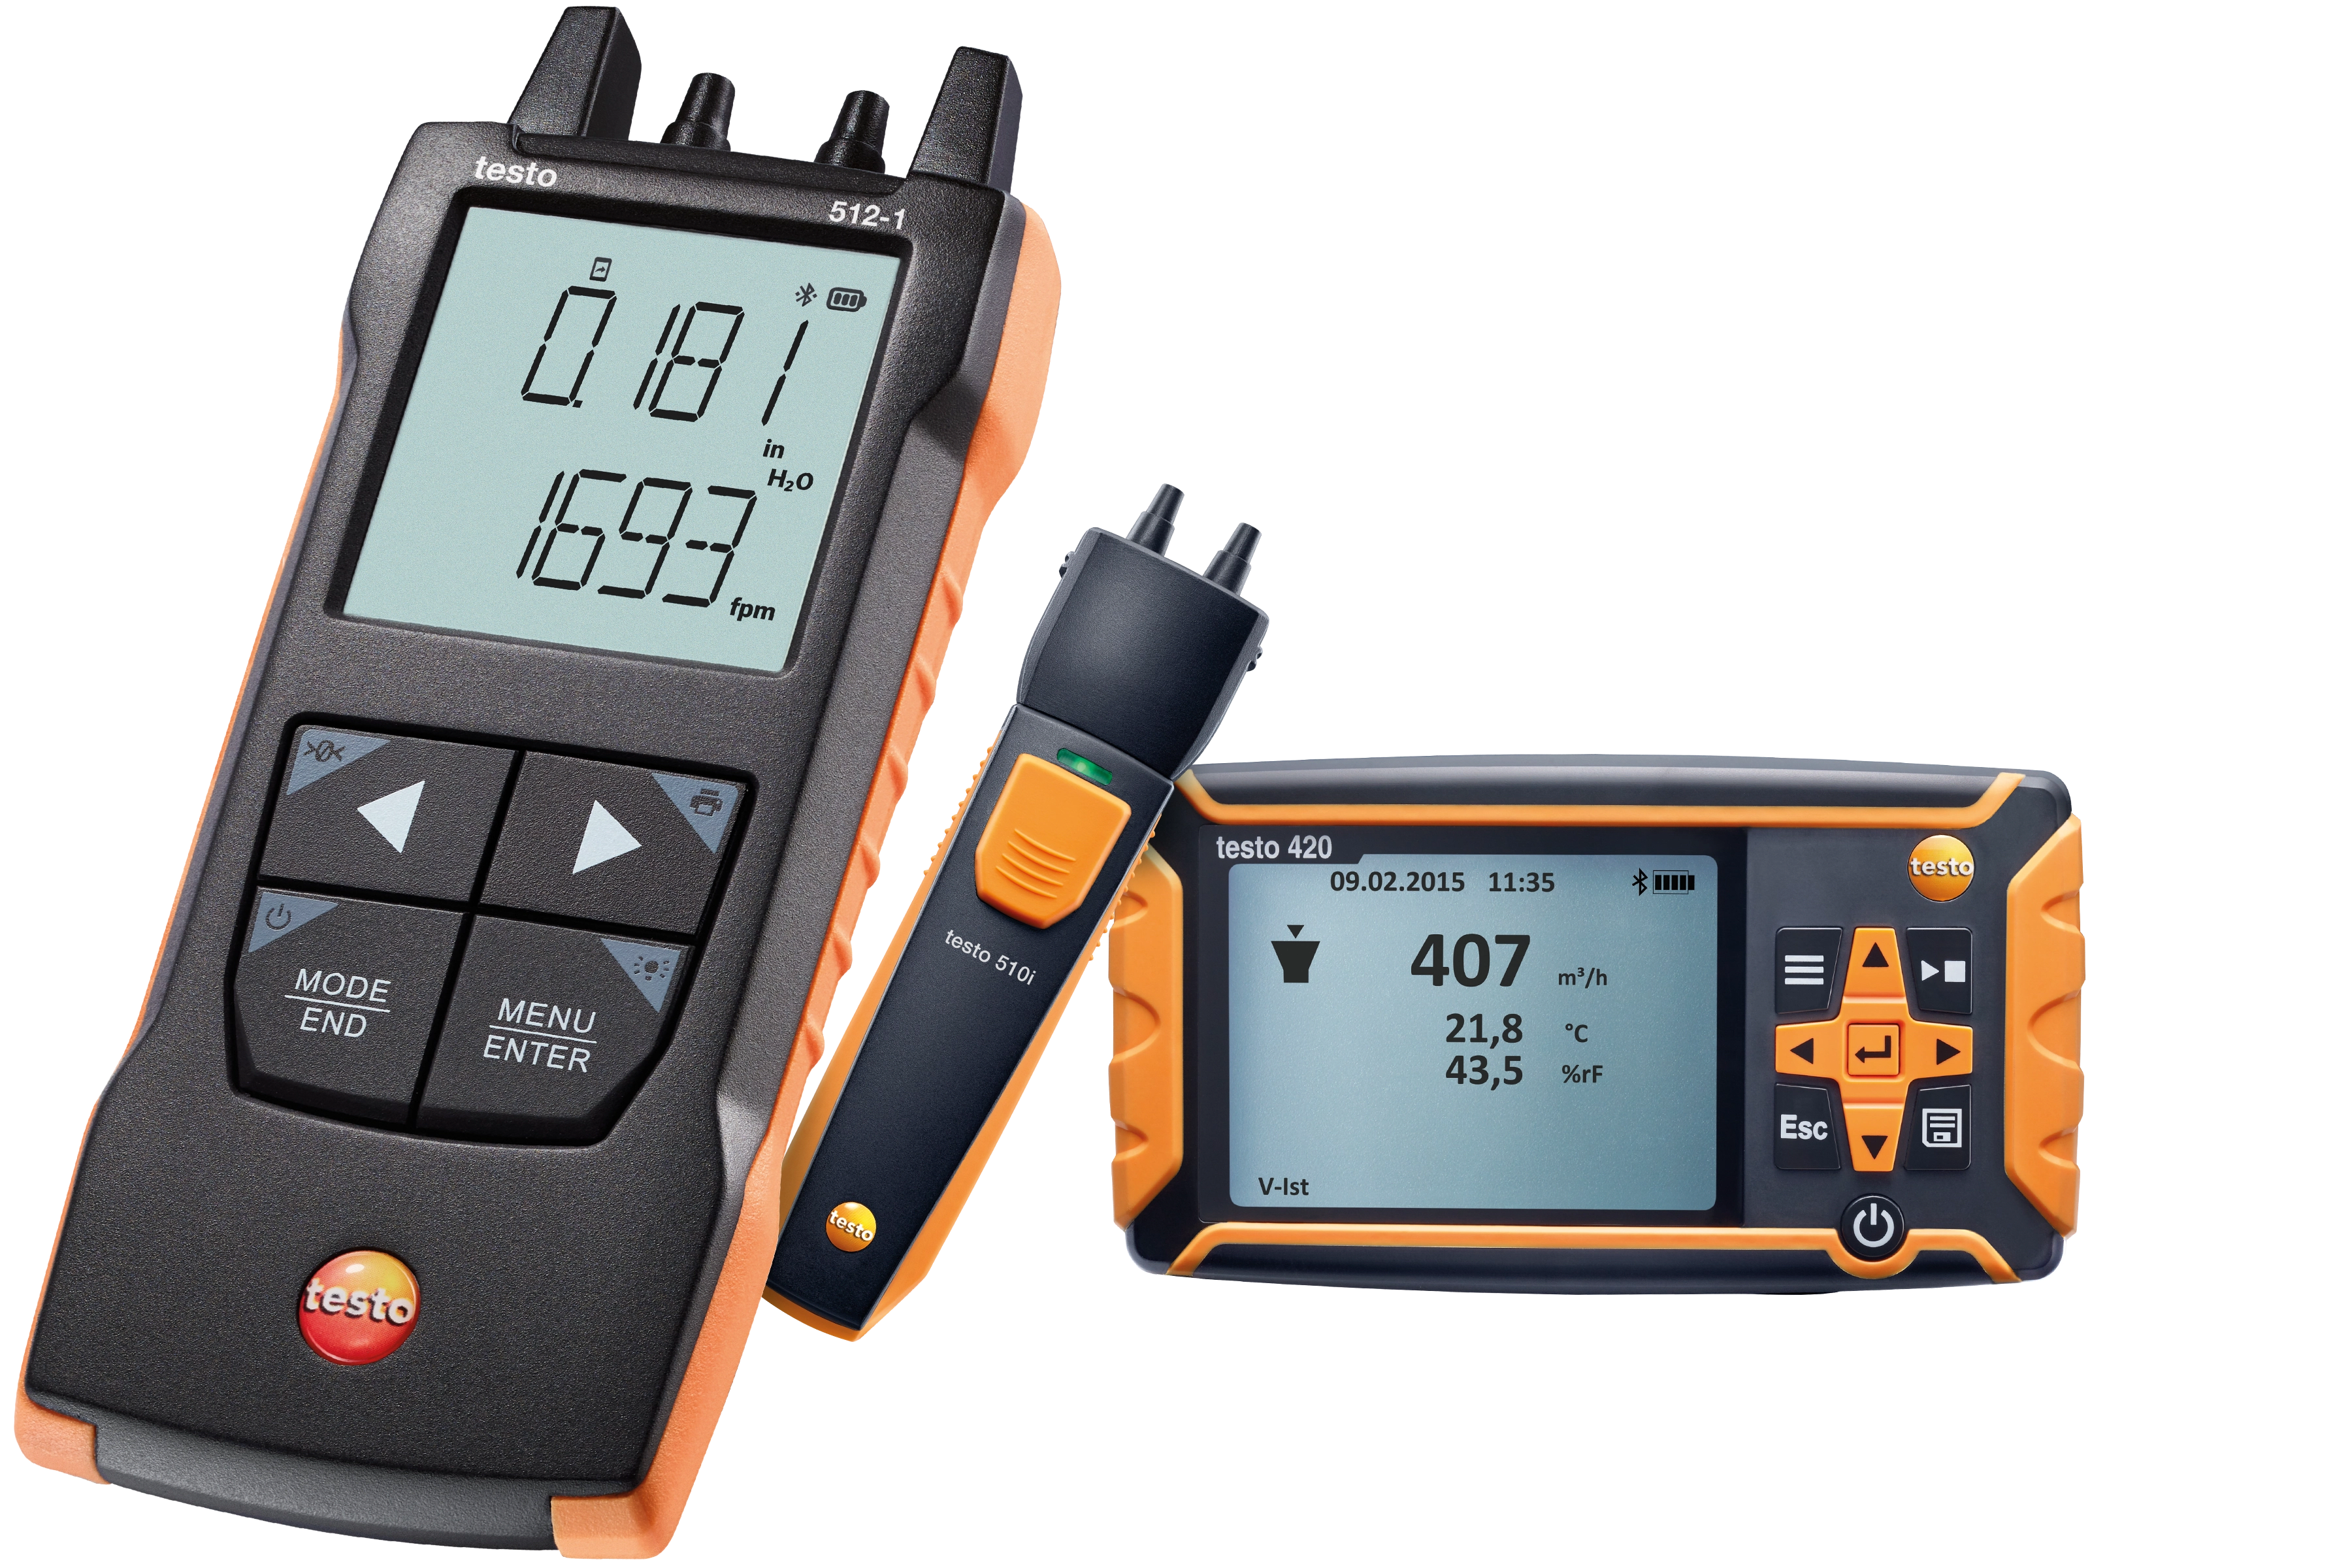 Handheld Air Pressure Meter for Differential and Absolute Air Pressures